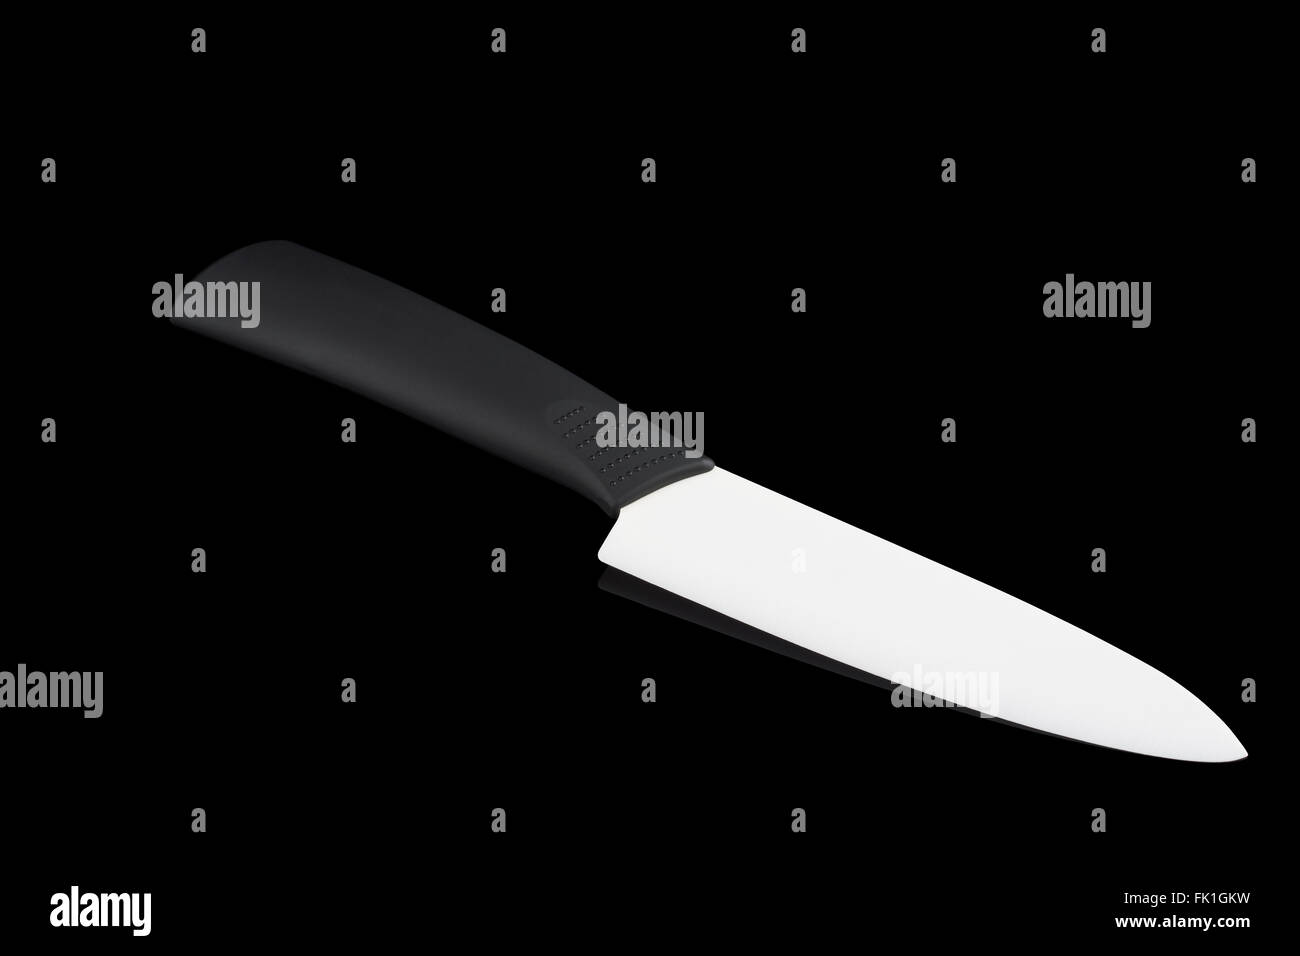 https://c8.alamy.com/comp/FK1GKW/one-white-ceramic-knife-on-black-reflecting-background-FK1GKW.jpg